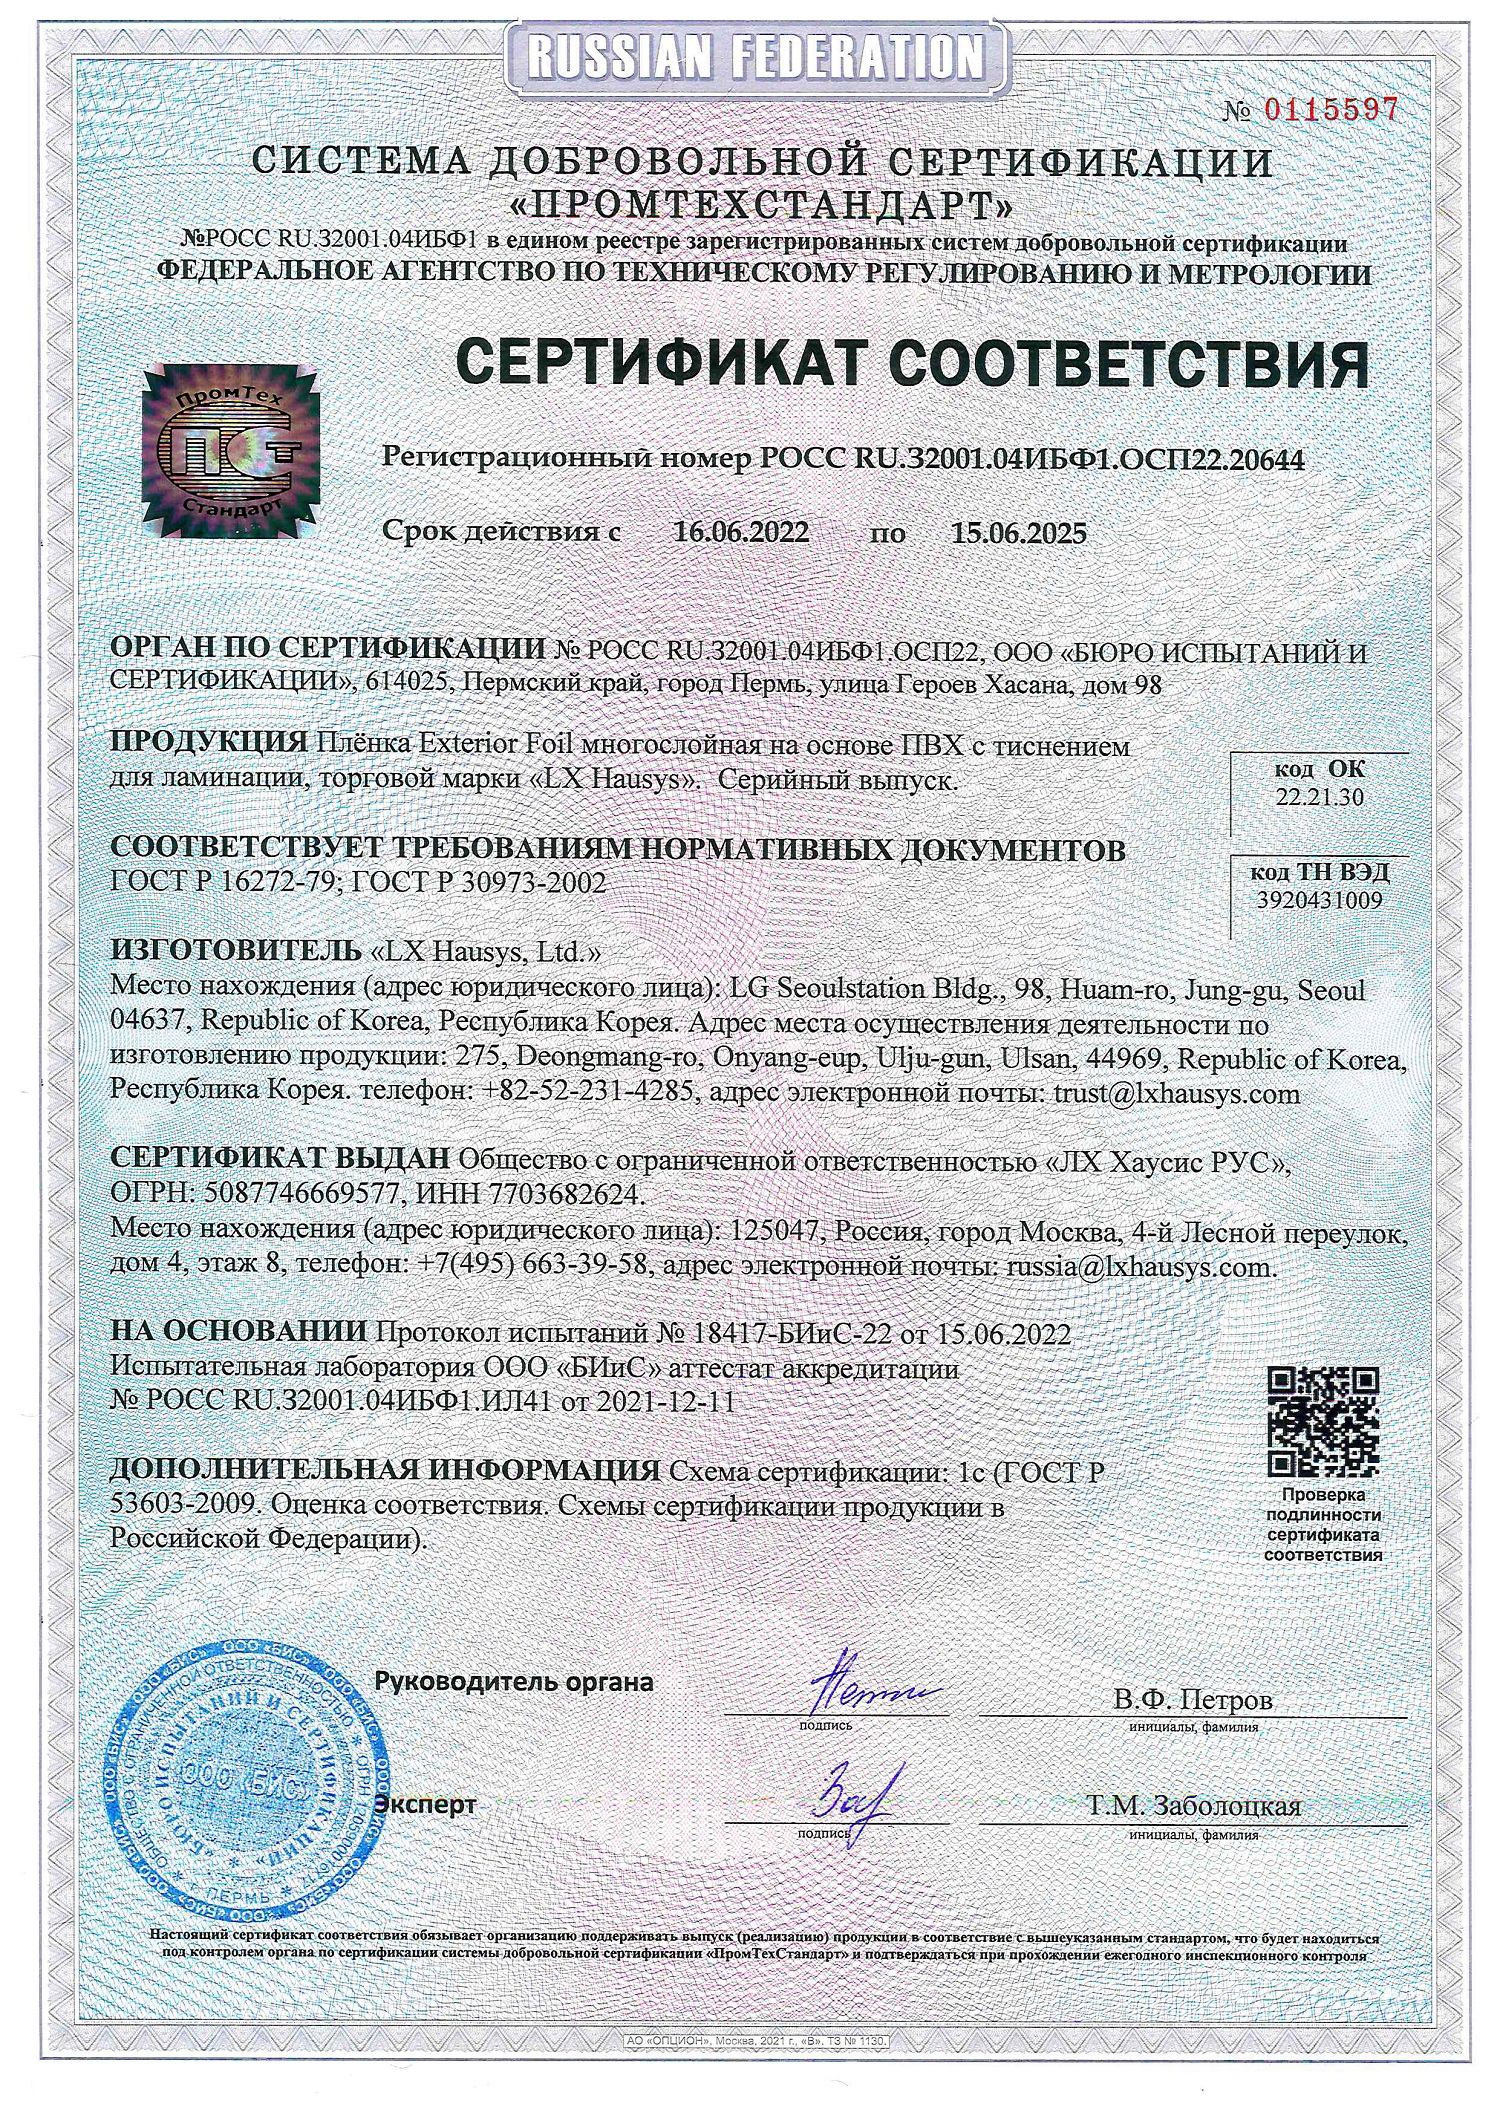 Сертификат ГОСТ Ех Foil LХ Hausys, 15.06.2025